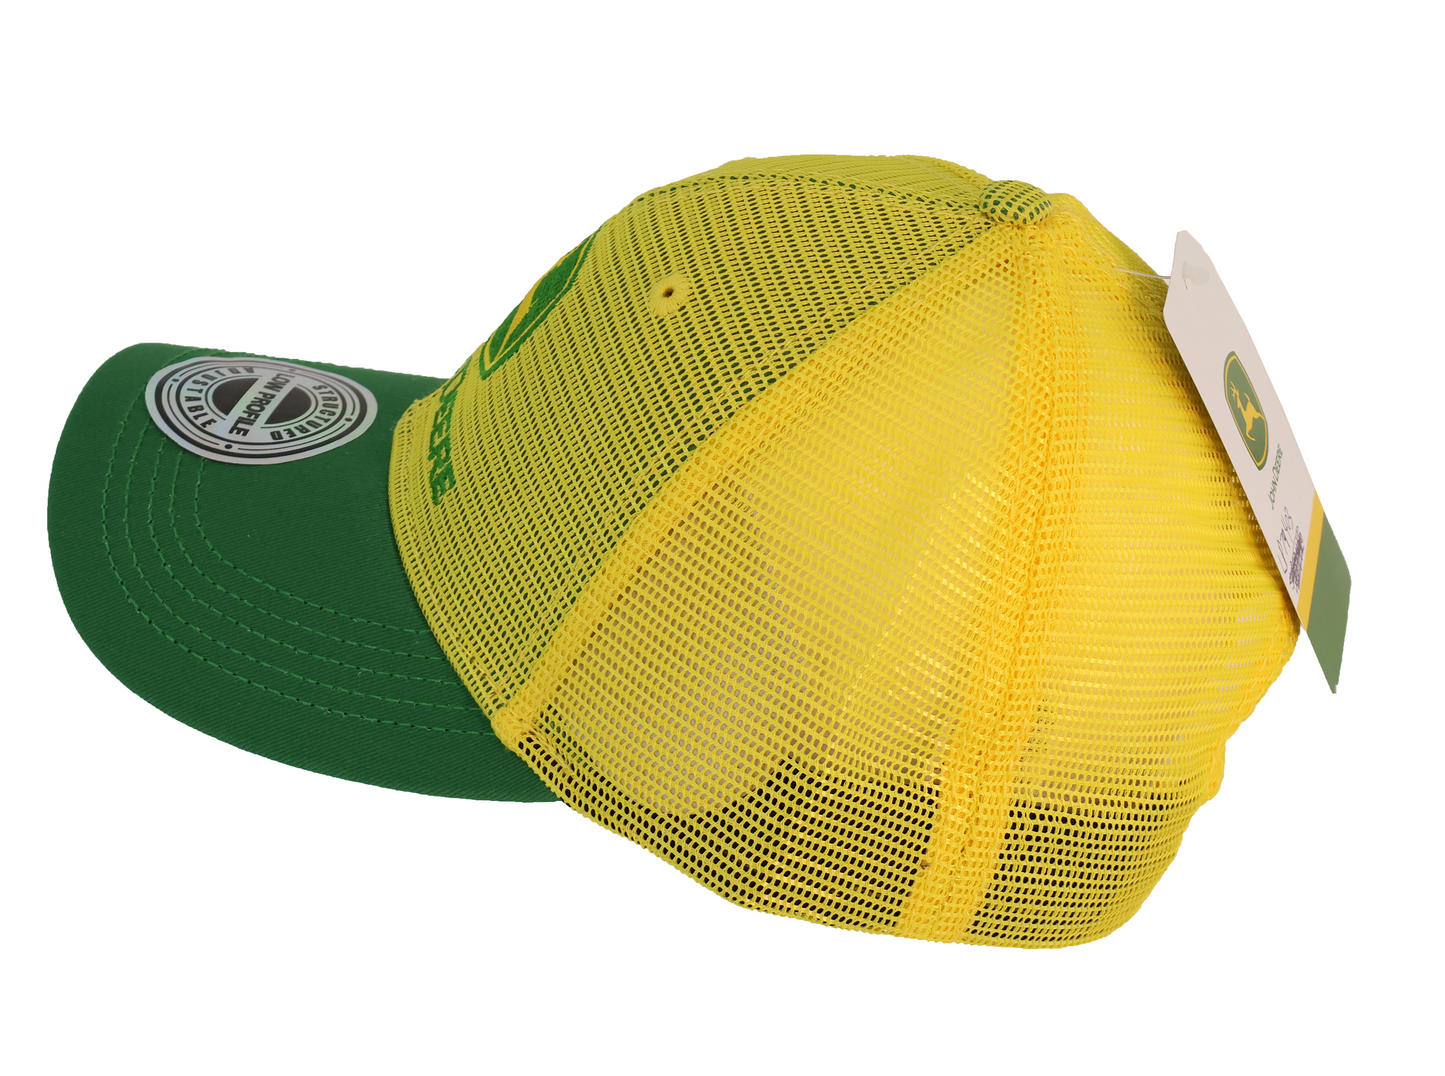 John Deere Green Hat With Yellow Mesh Overlay - LP79403